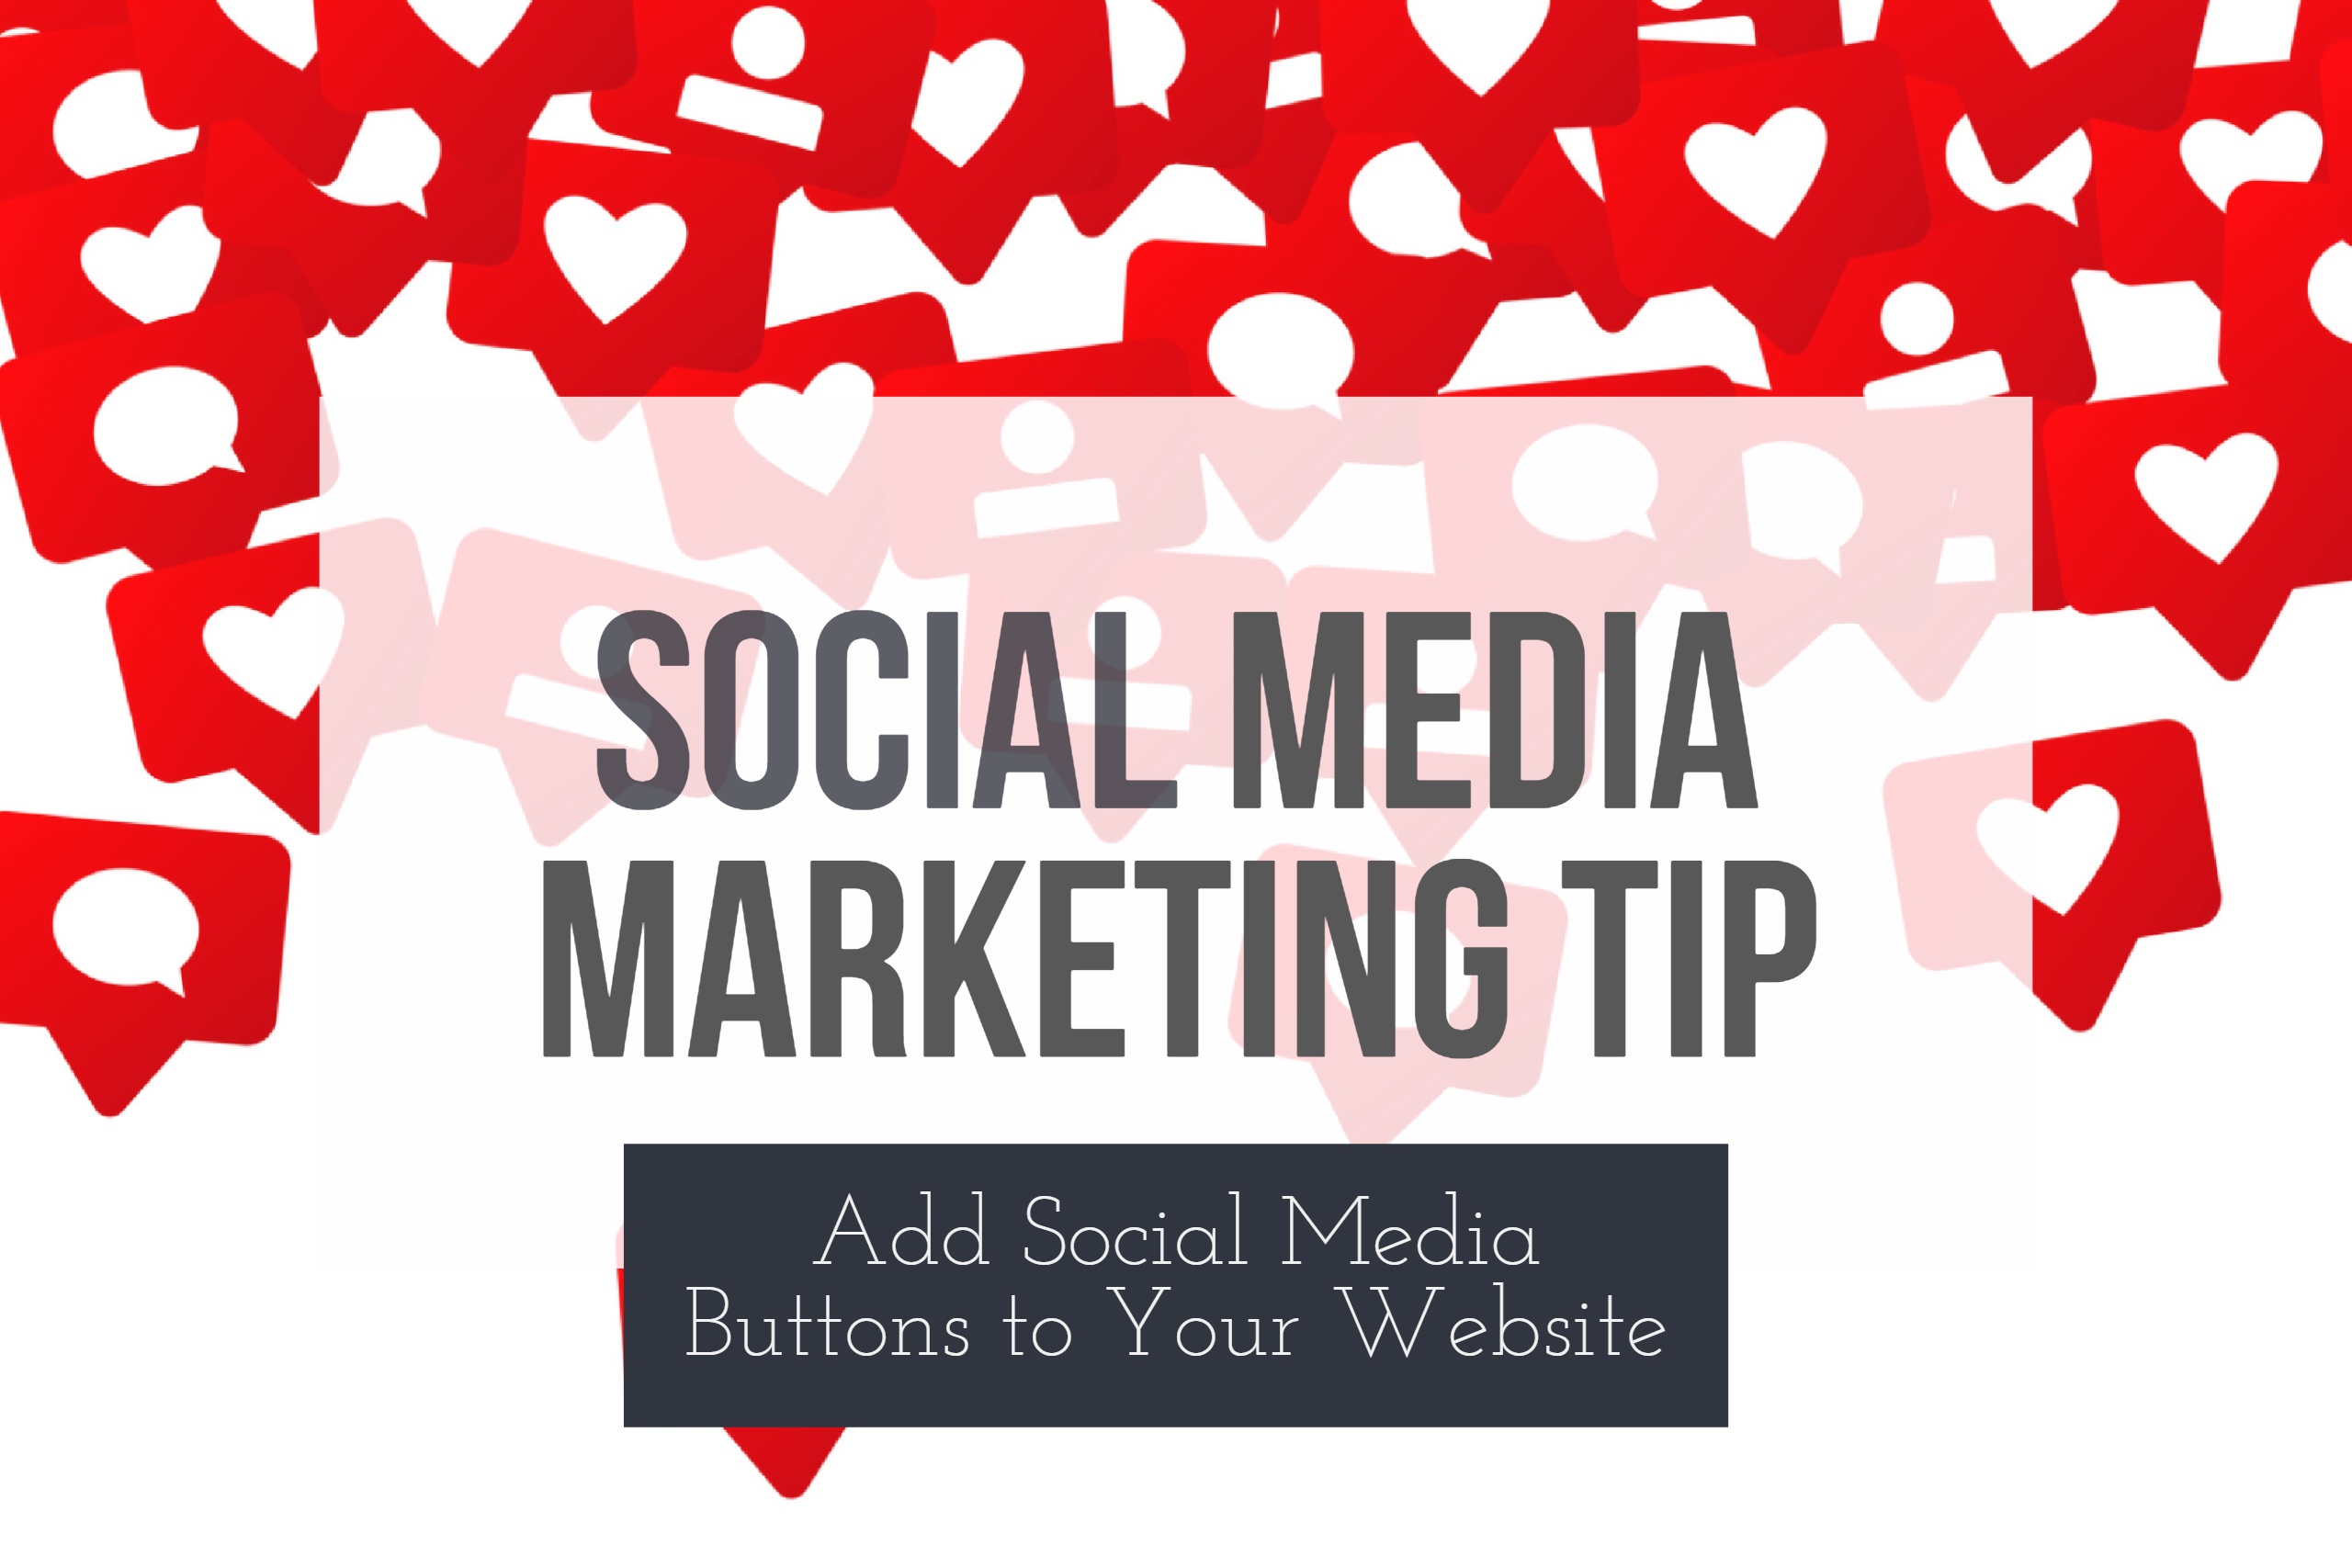 Social Media Marketing Tip: Add Social Media Buttons to Your Website